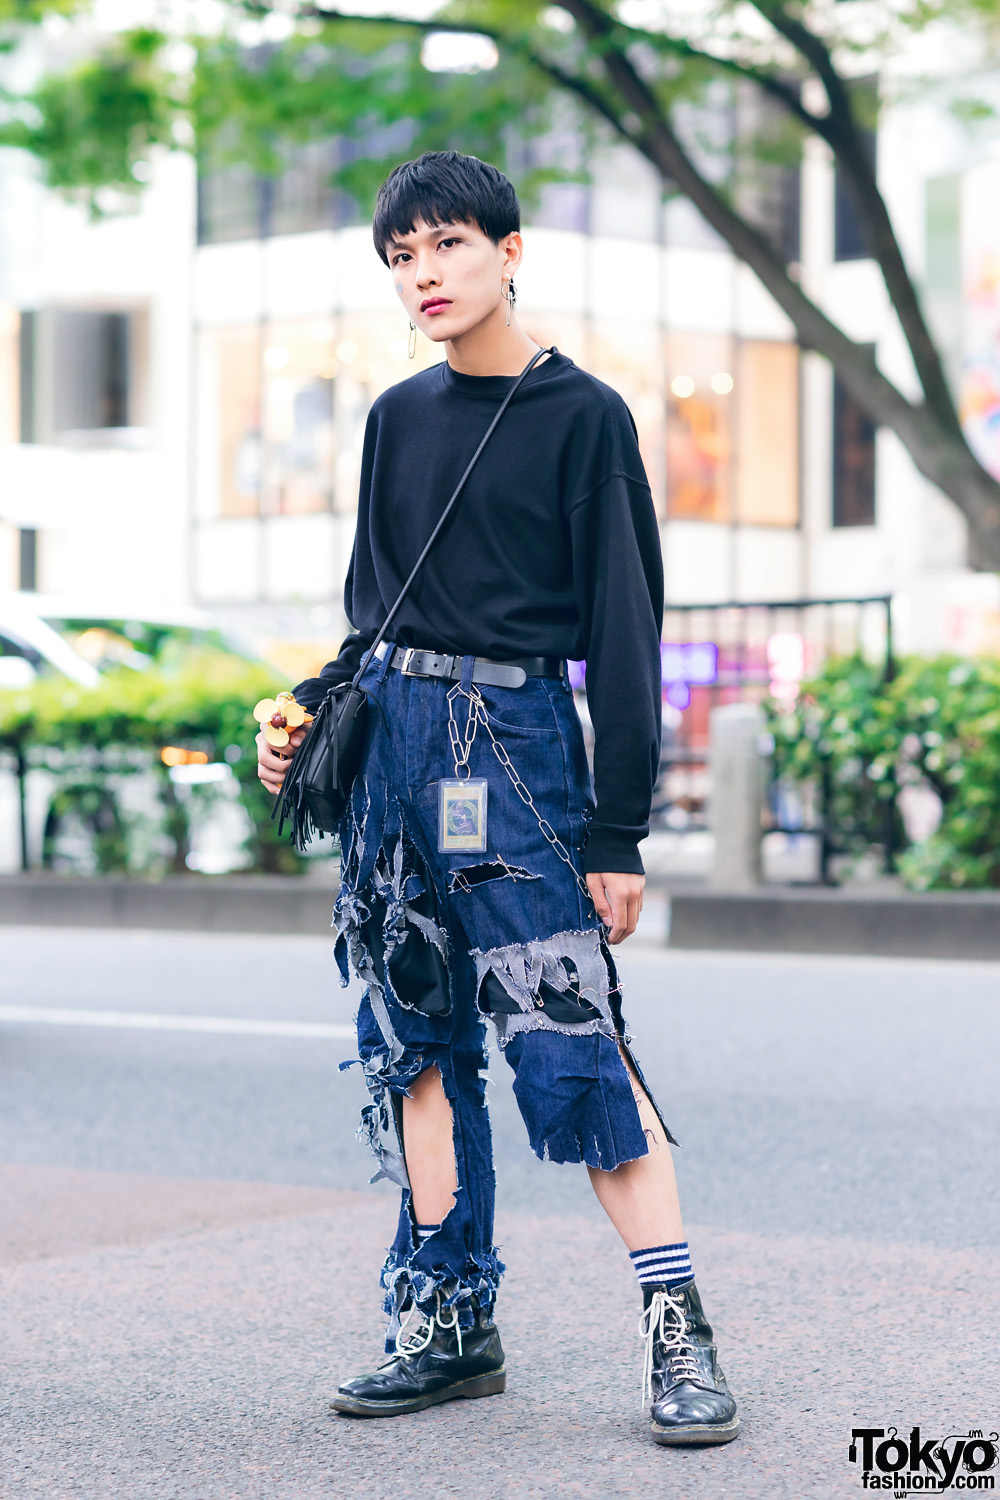 Tokyo Vintage & Remake Streetwear Style w/ Ripped Jeans, Fringe